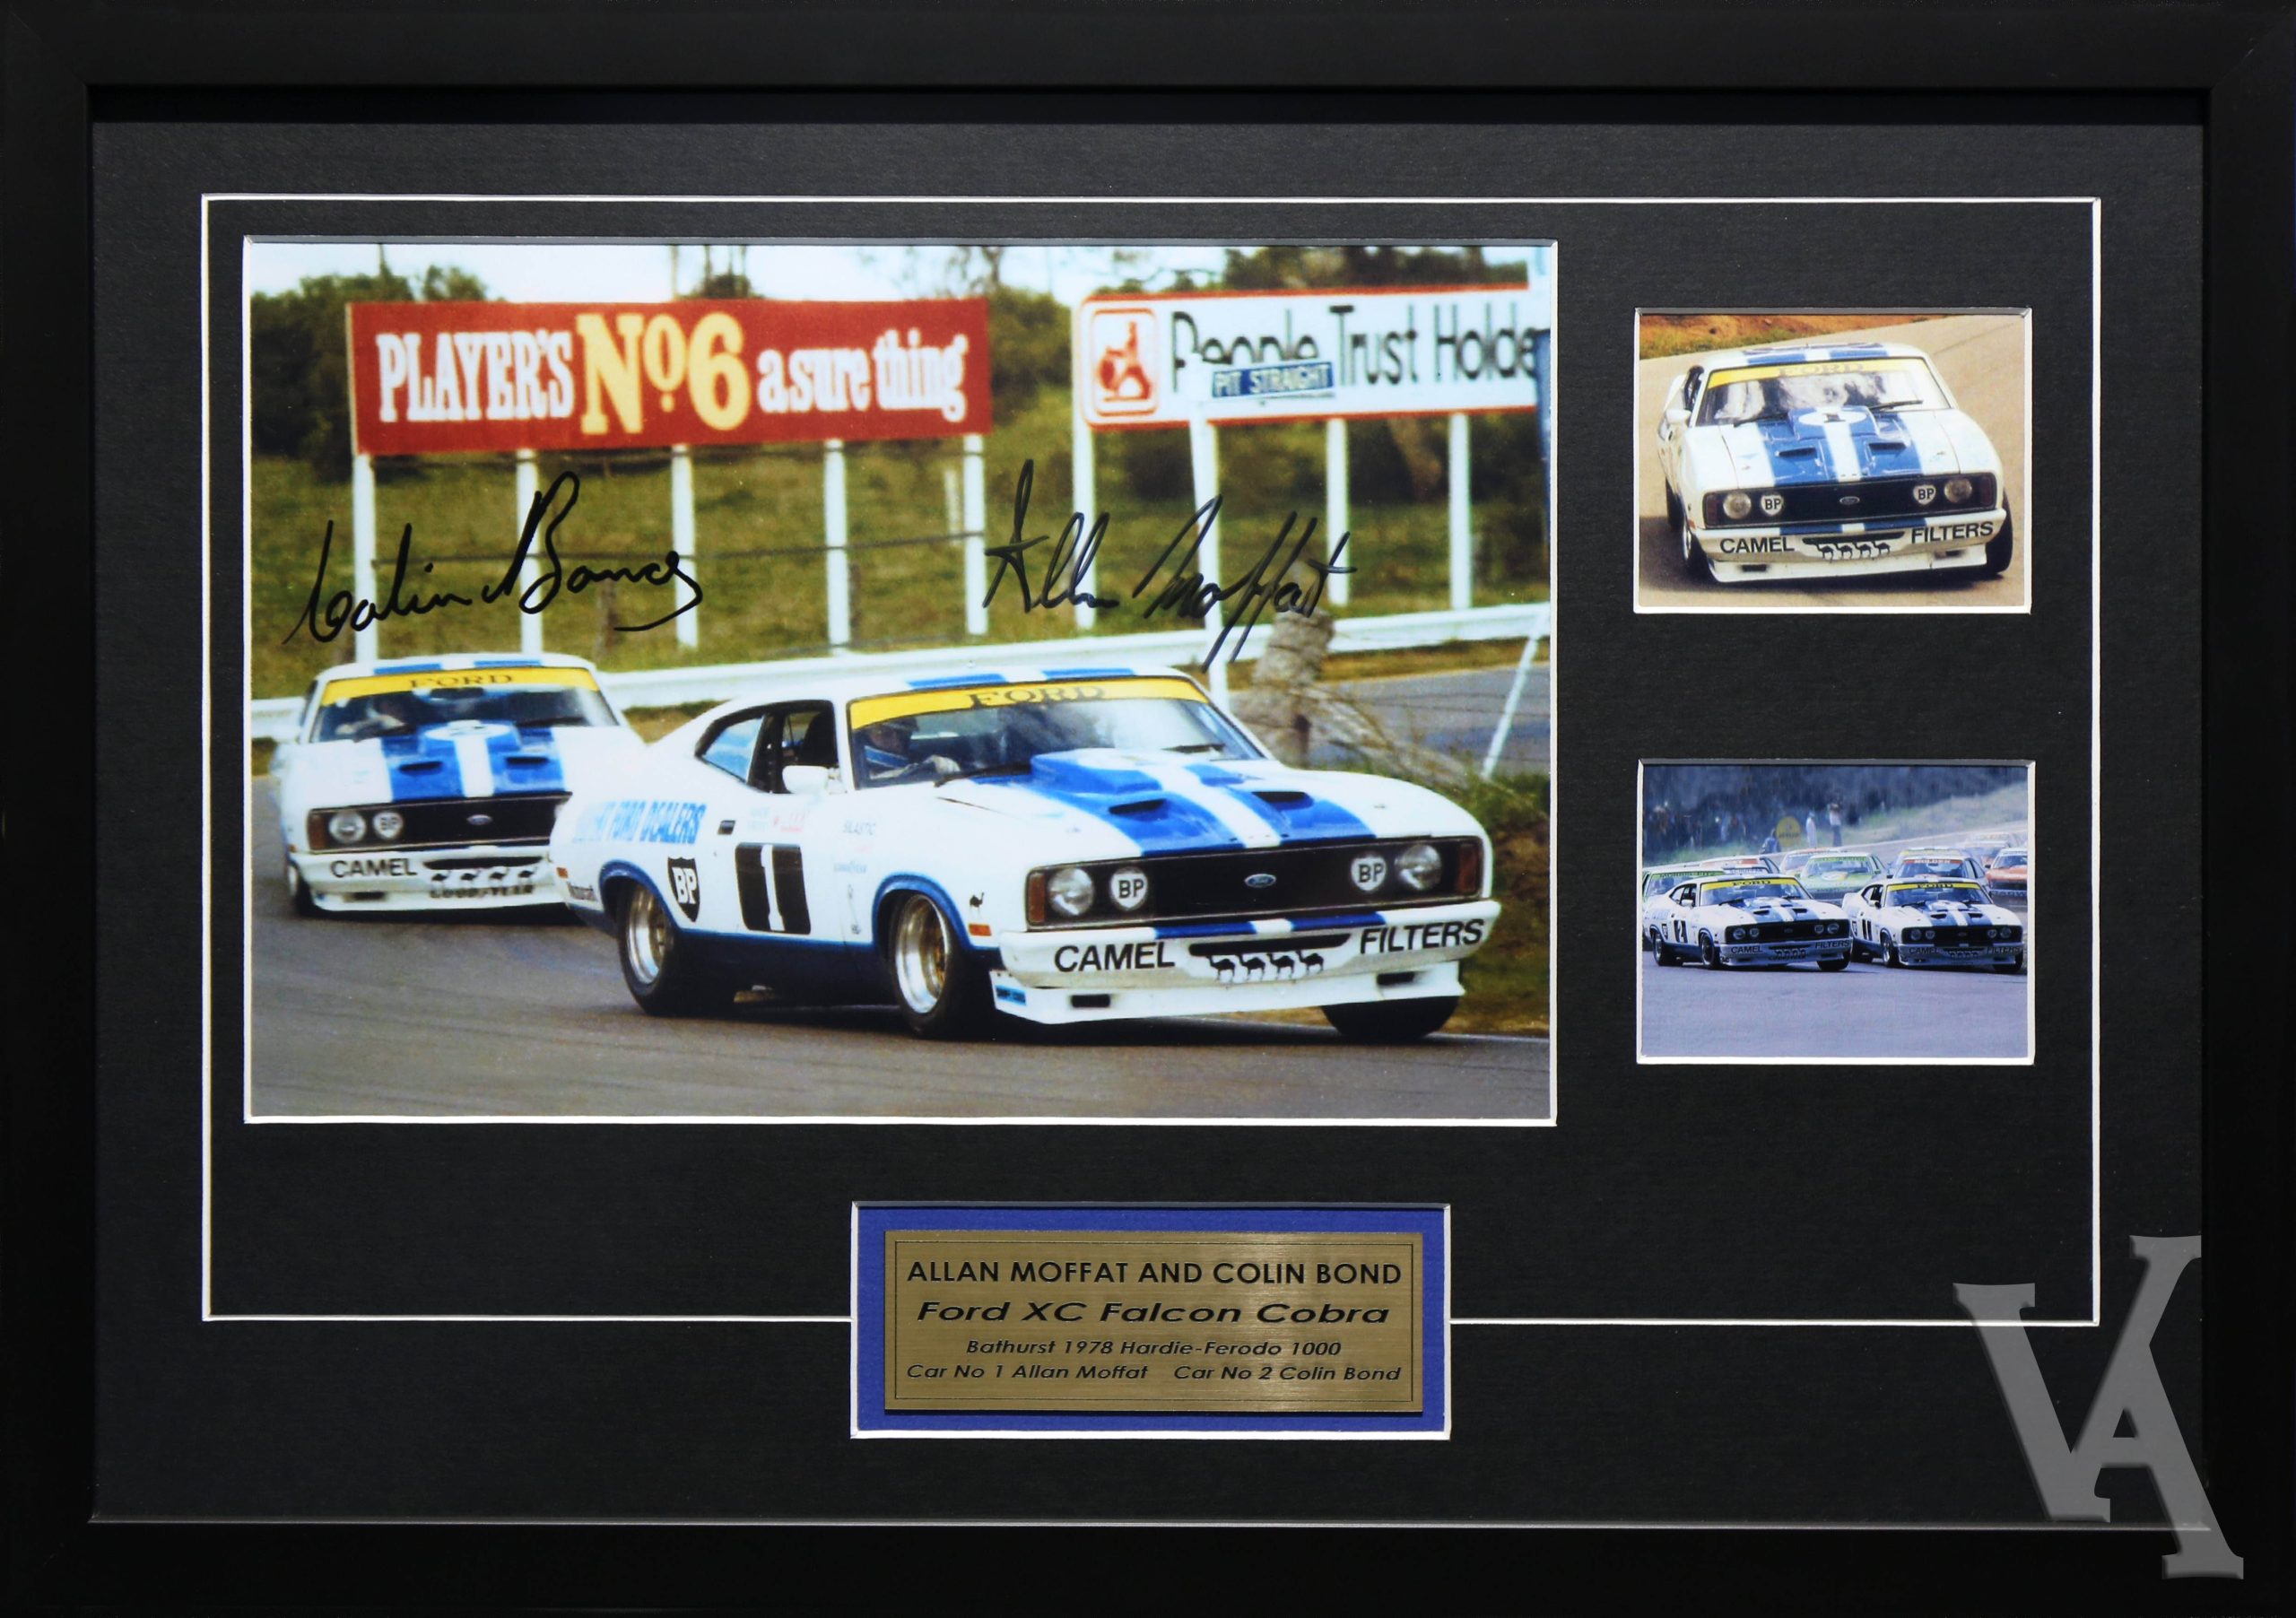 Allan Moffat & Colin Bond Signed & Framed Motor Racing Memorabilia. 1976 Ford XC Falcon Cobra Bathurst.